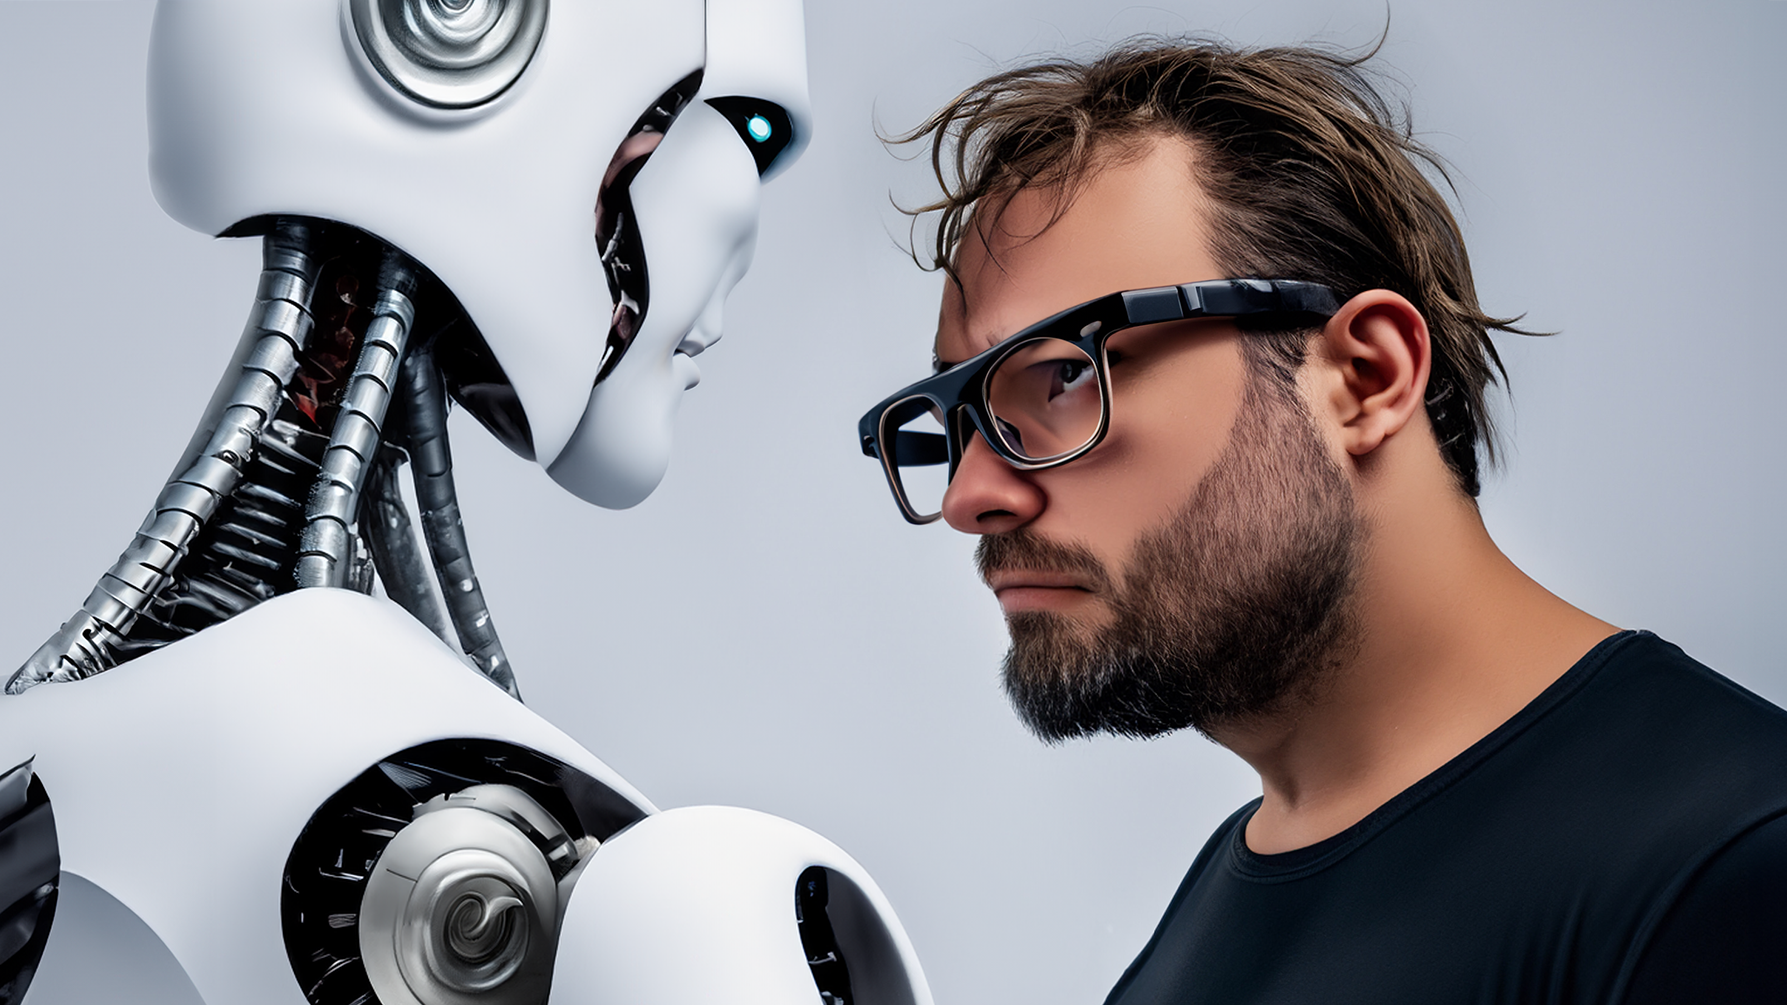 Artificial Art – Human Composers vs. AI